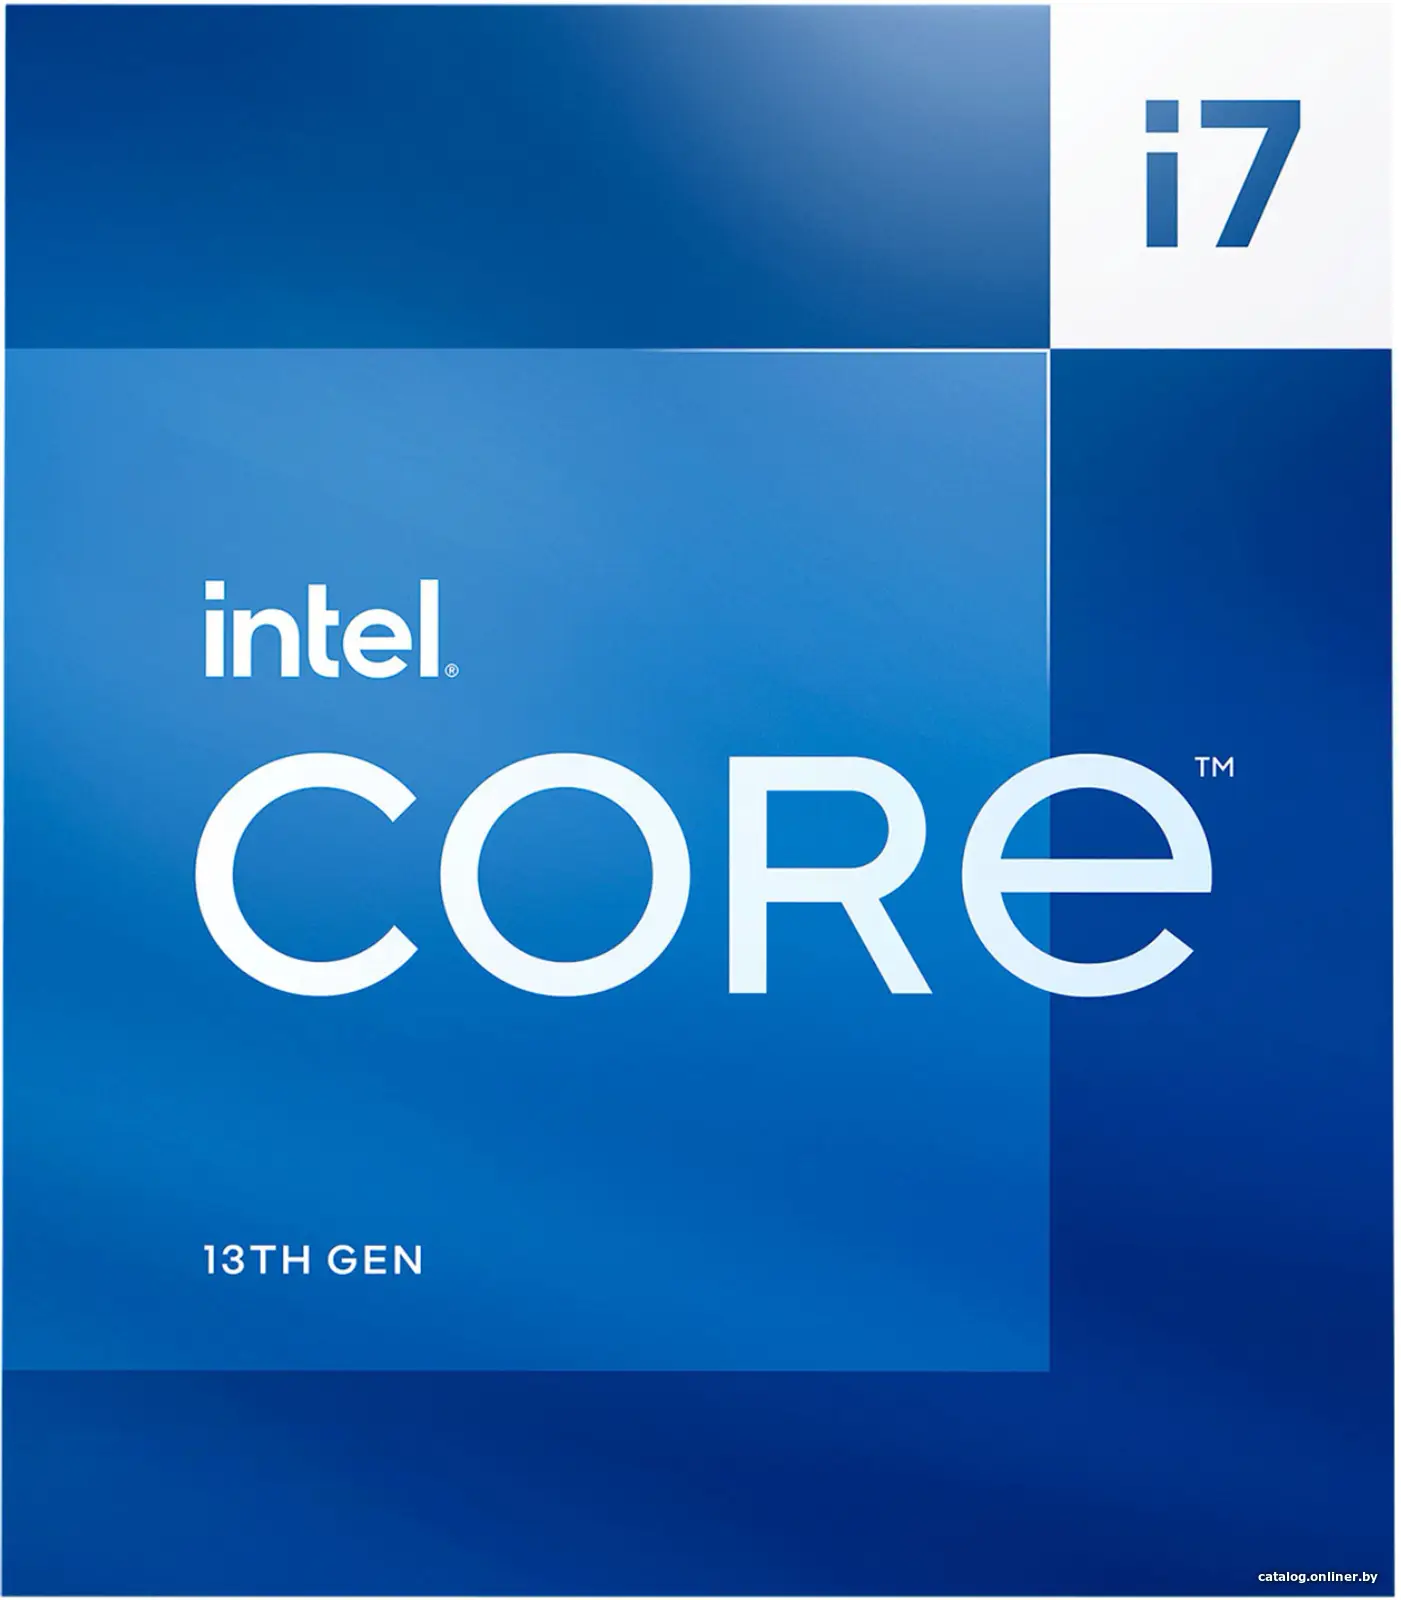 Купить Процессор Intel CORE I7-13700F S1700 OEM 2.1G CM8071504820806 S RMBB IN, цена, опт и розница